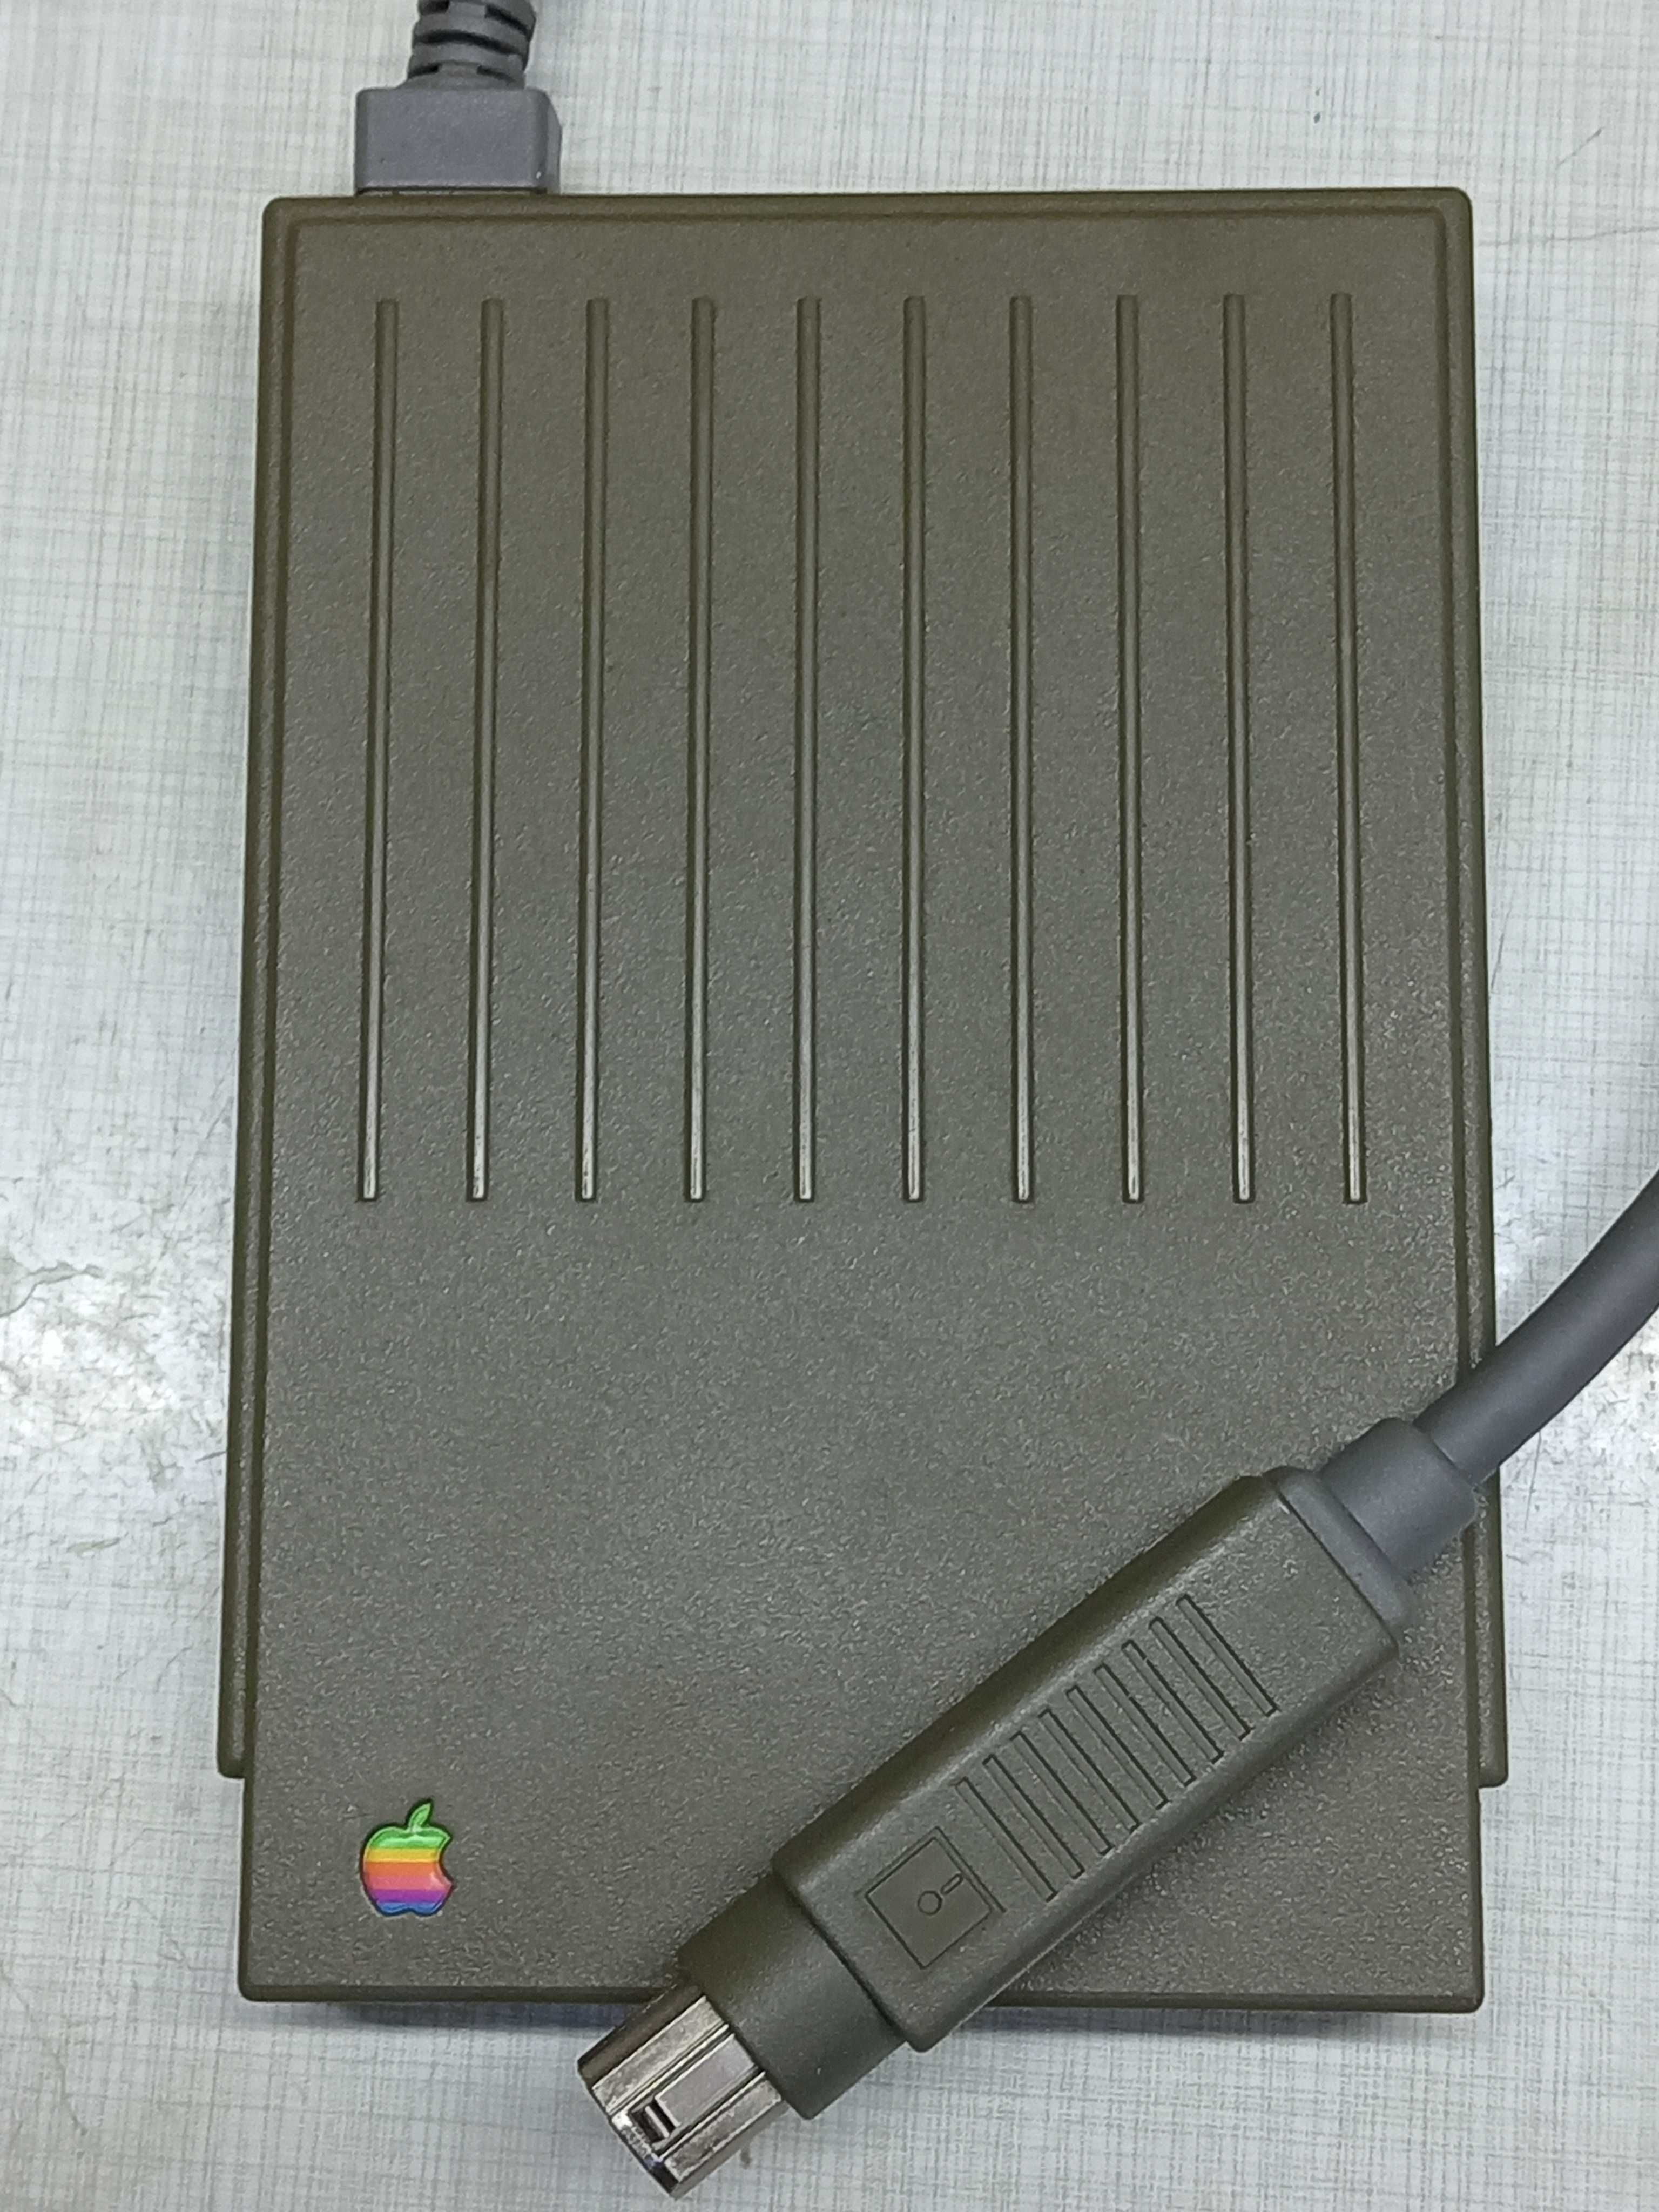 Unitate floppy disk Apple Macintosh HDI-20